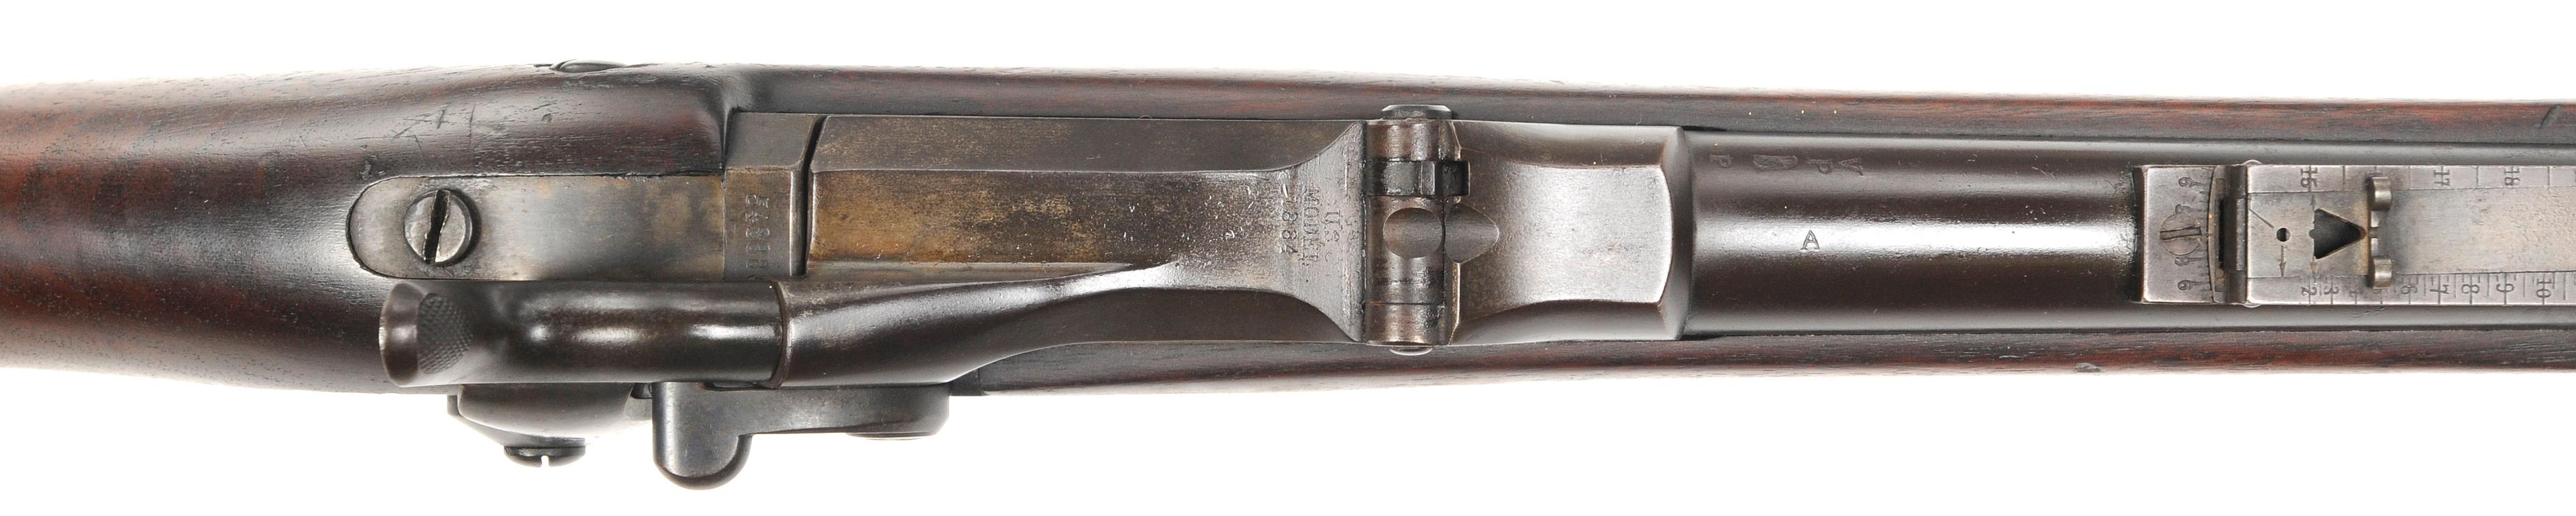 US Springfield Model 1884 / 1888 "Trapdoor" 45-70 Breach Loading Rifle, Antique, SN: 542886 (DJQ 1)